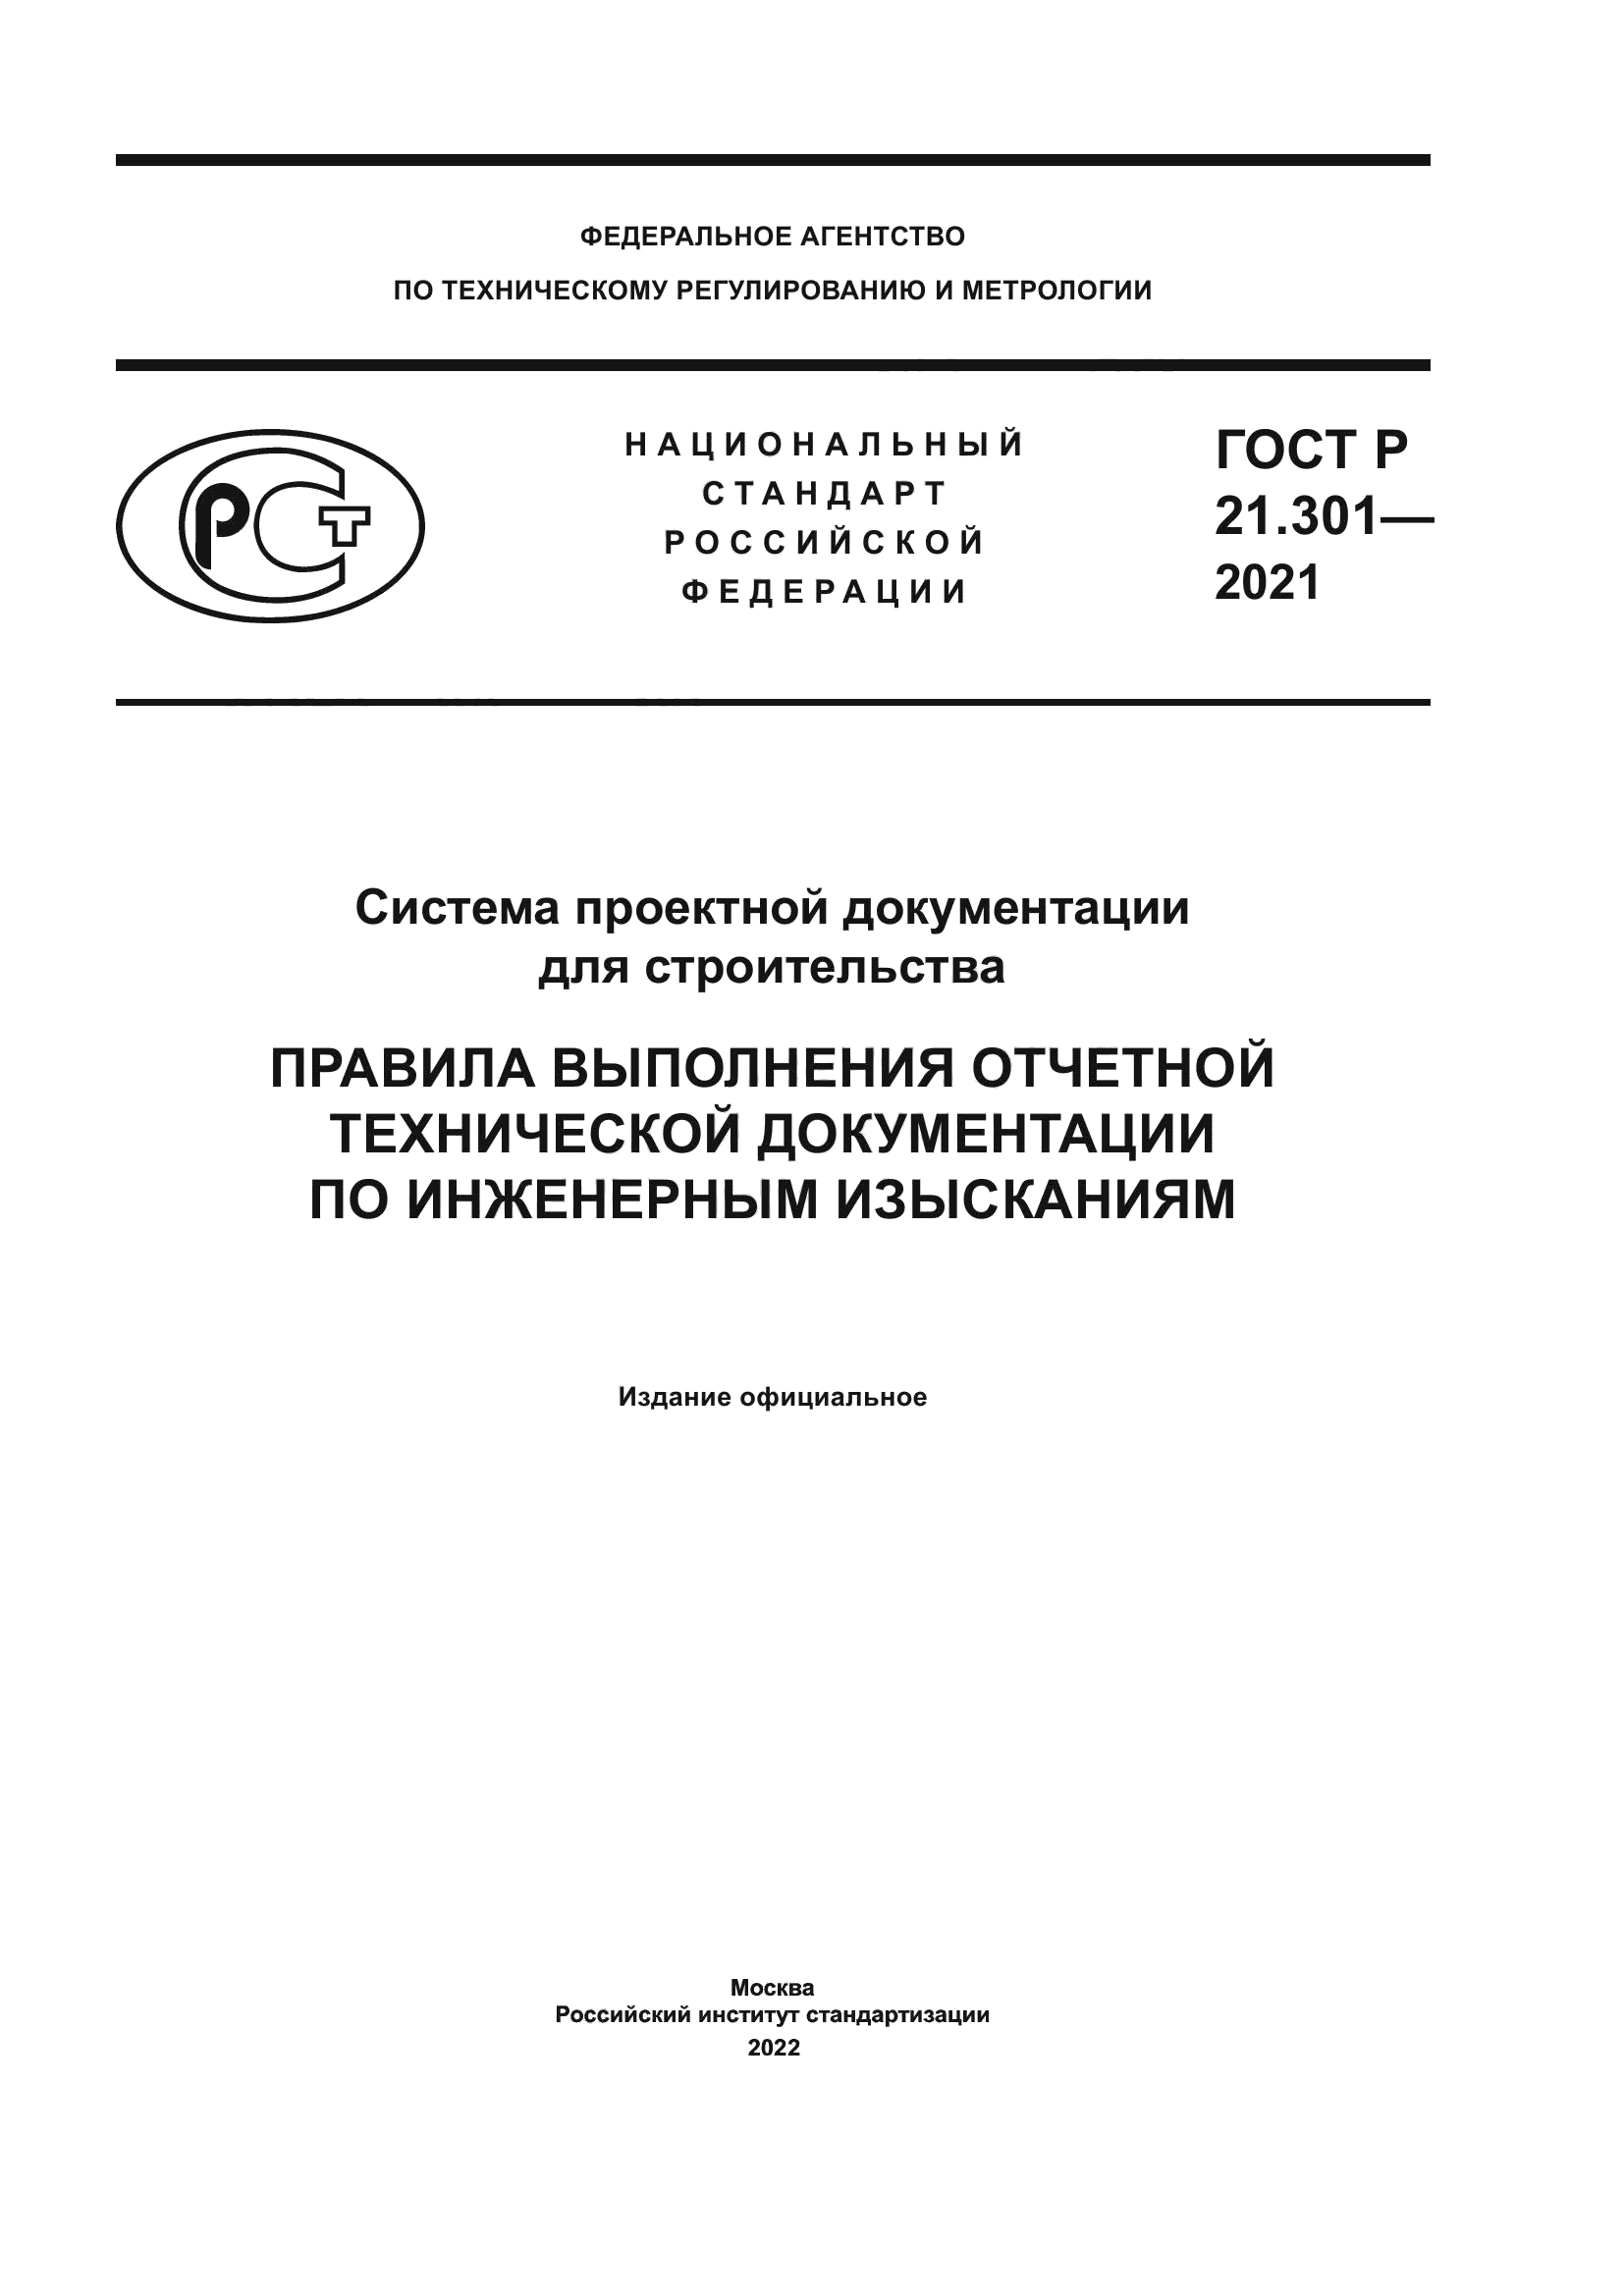 ГОСТ Р 21.301-2021